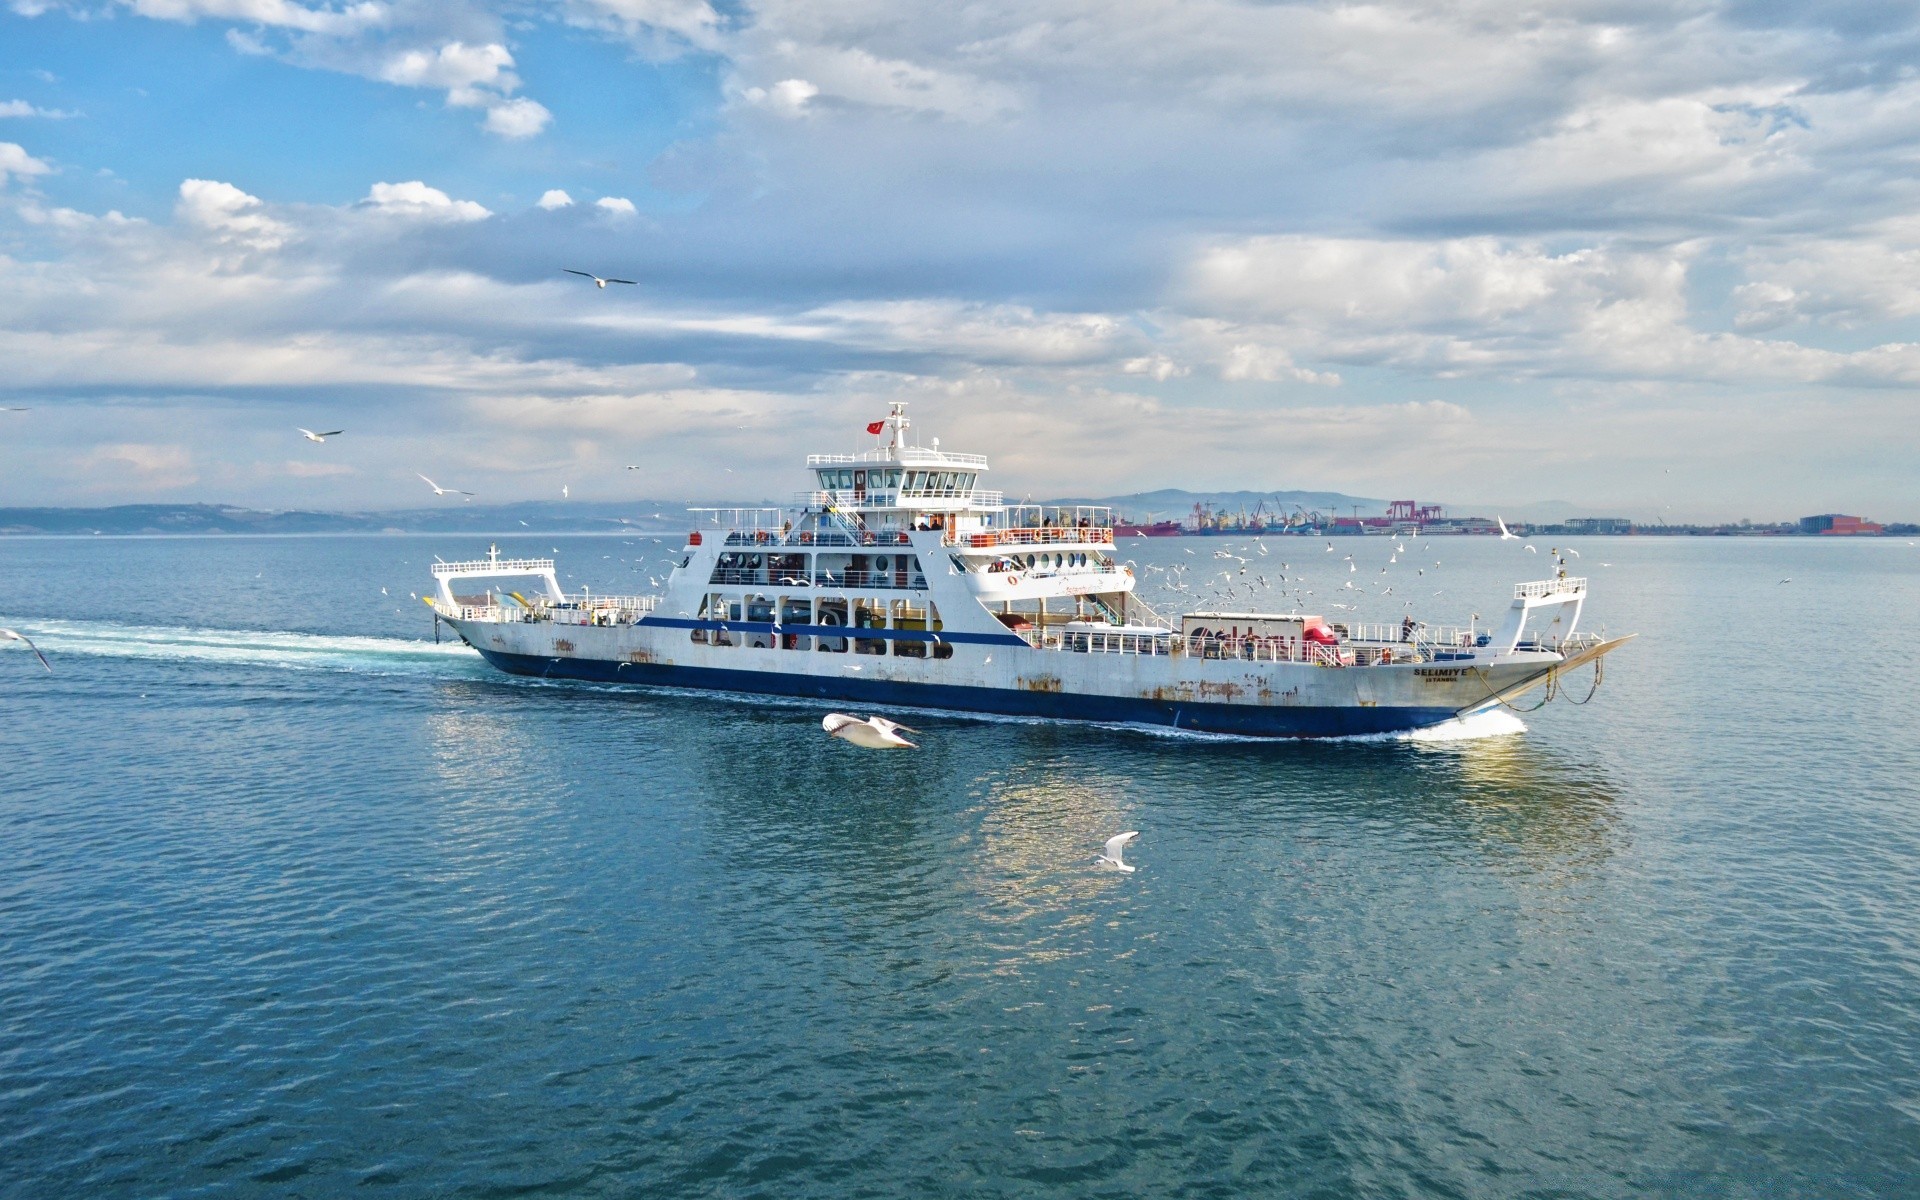 europe water sea watercraft travel transportation system sky ship boat seashore ocean outdoors summer vehicle harbor